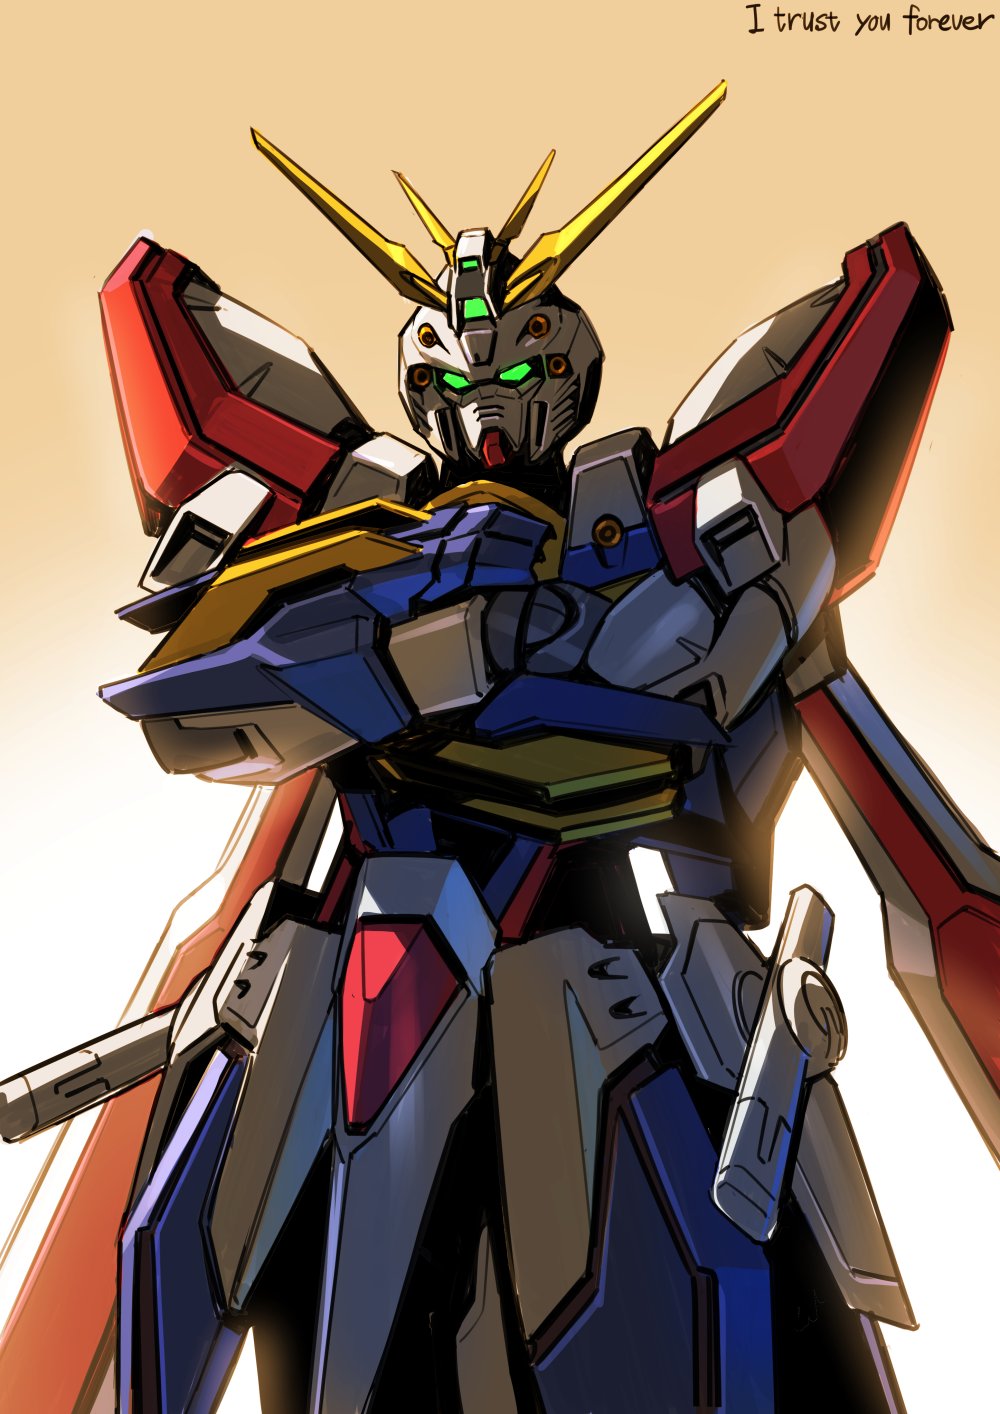 Anime 1000x1414 anime mechs Mobile Fighter G Gundam Super Robot Taisen Gundam God Gundam artwork digital art fan art